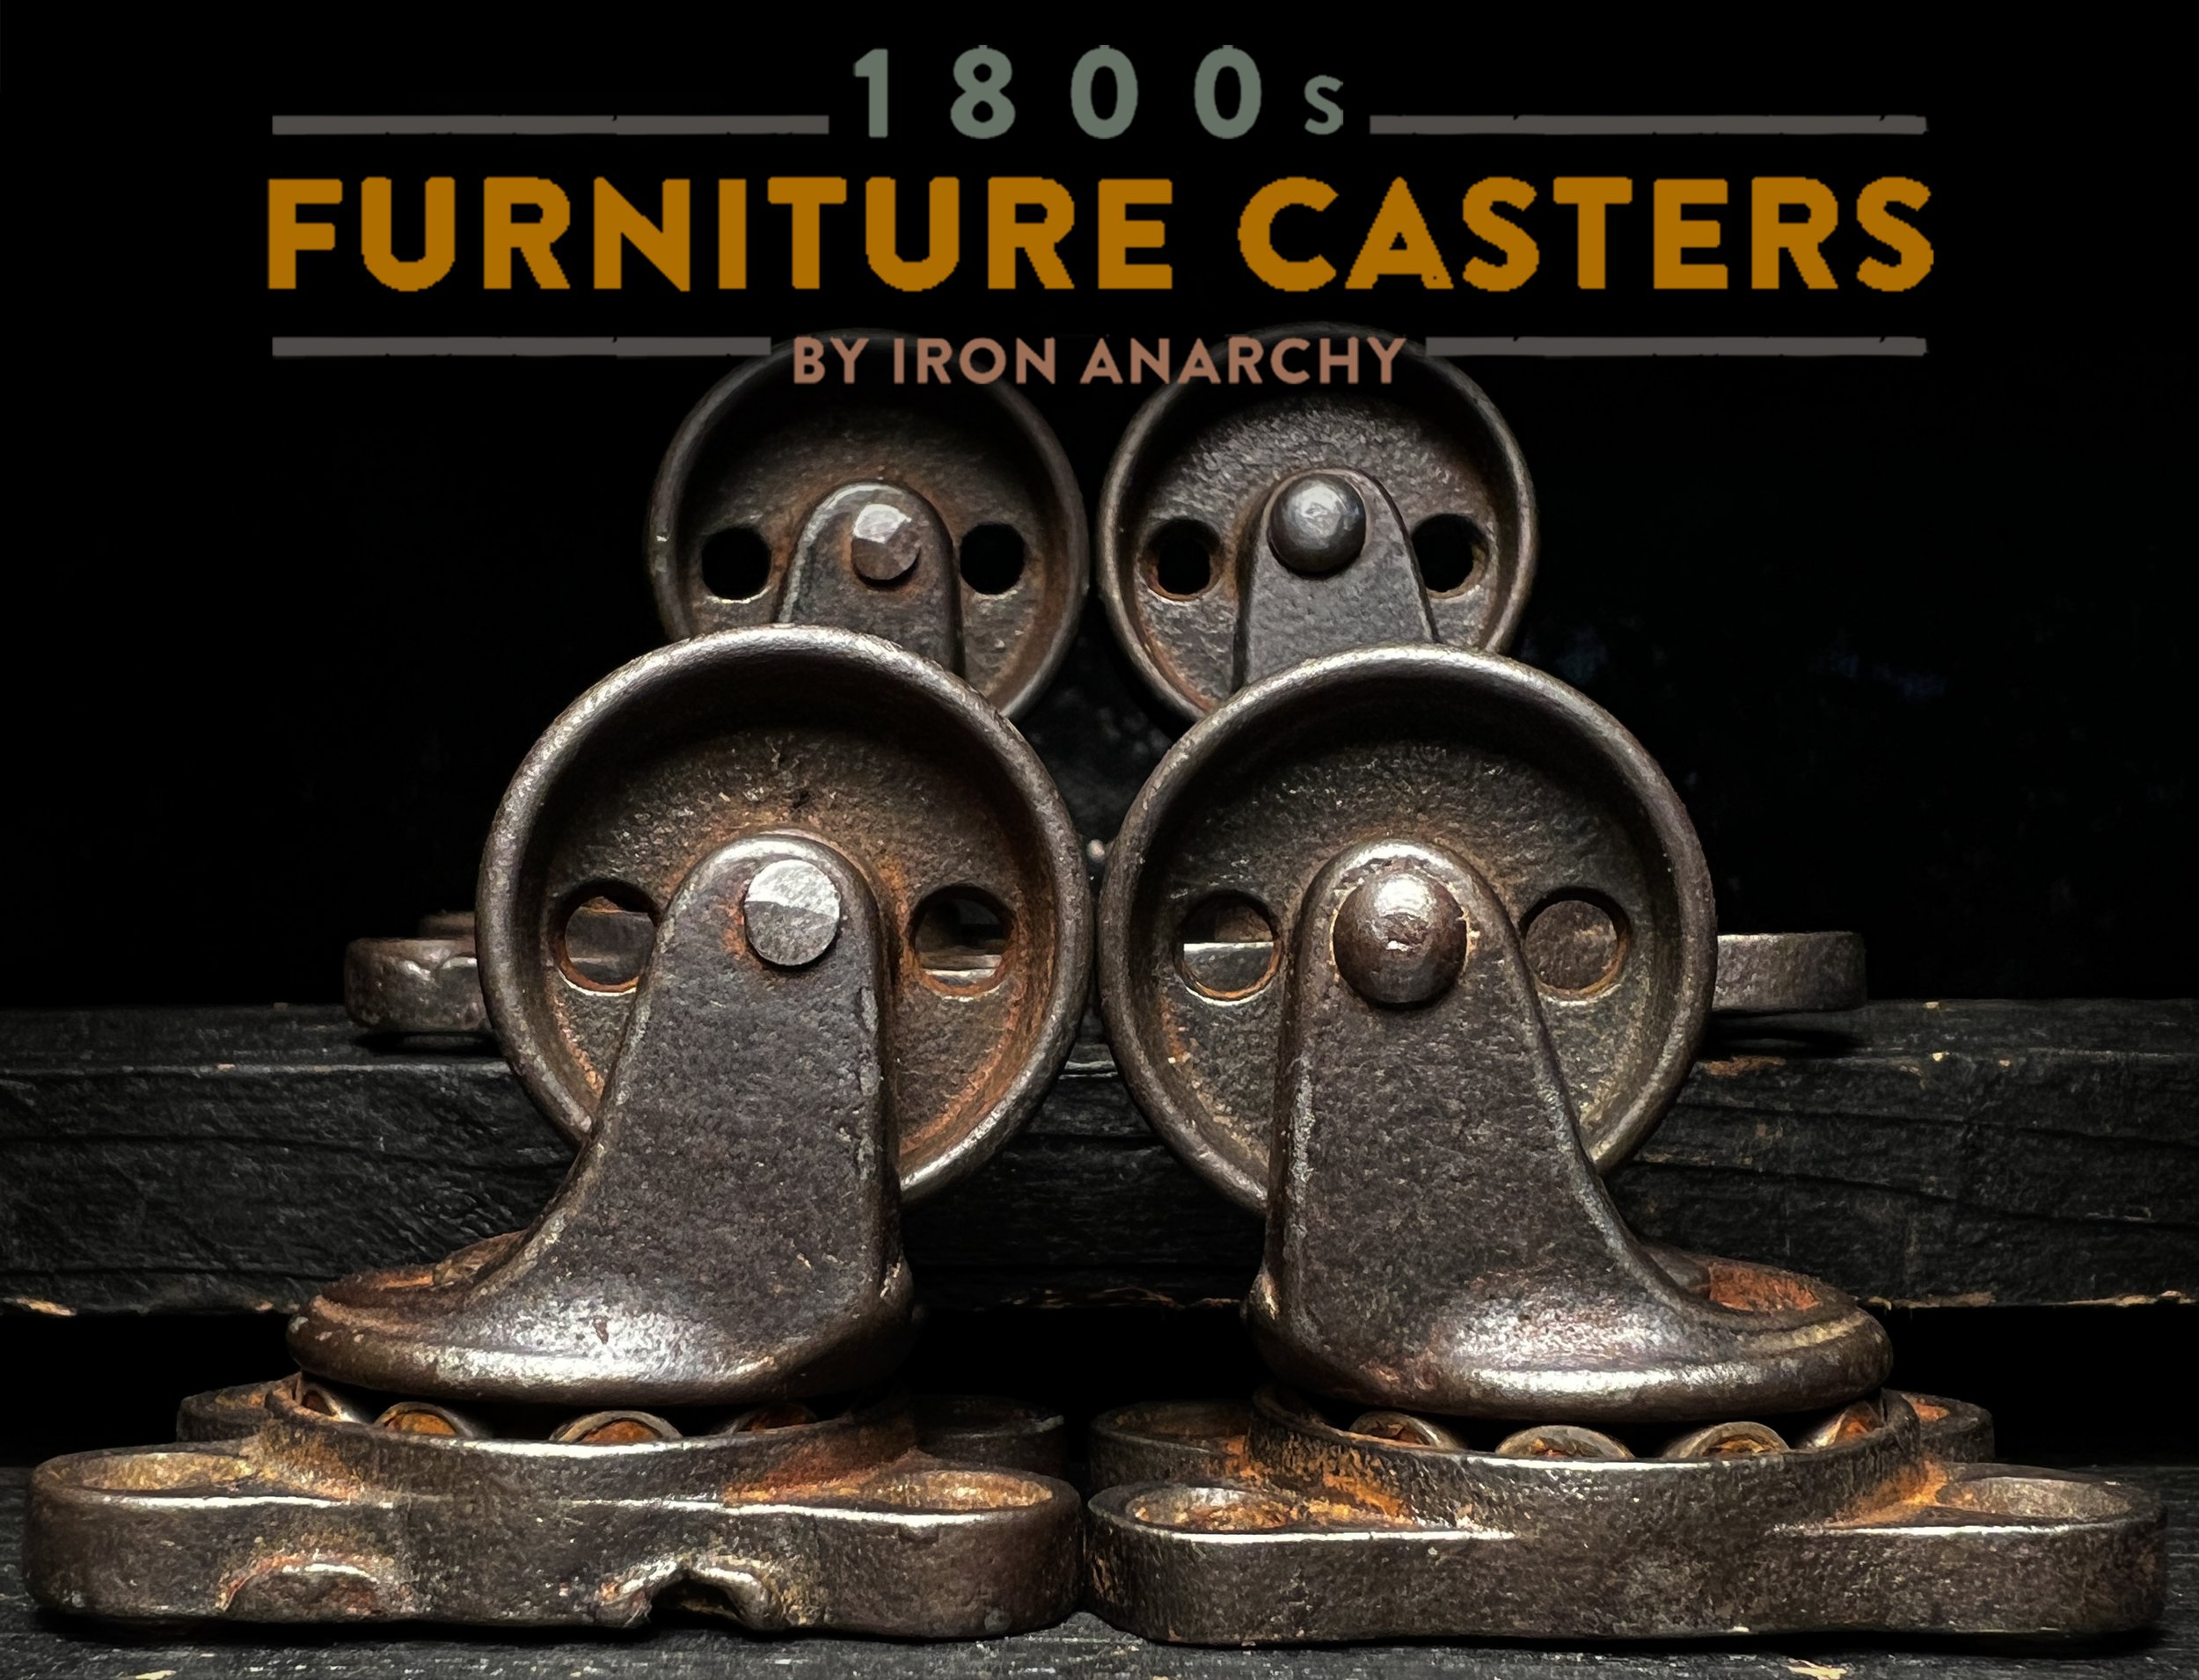 Antique Industrial Furniture Casters, Vintage Industrial Furniture Casters